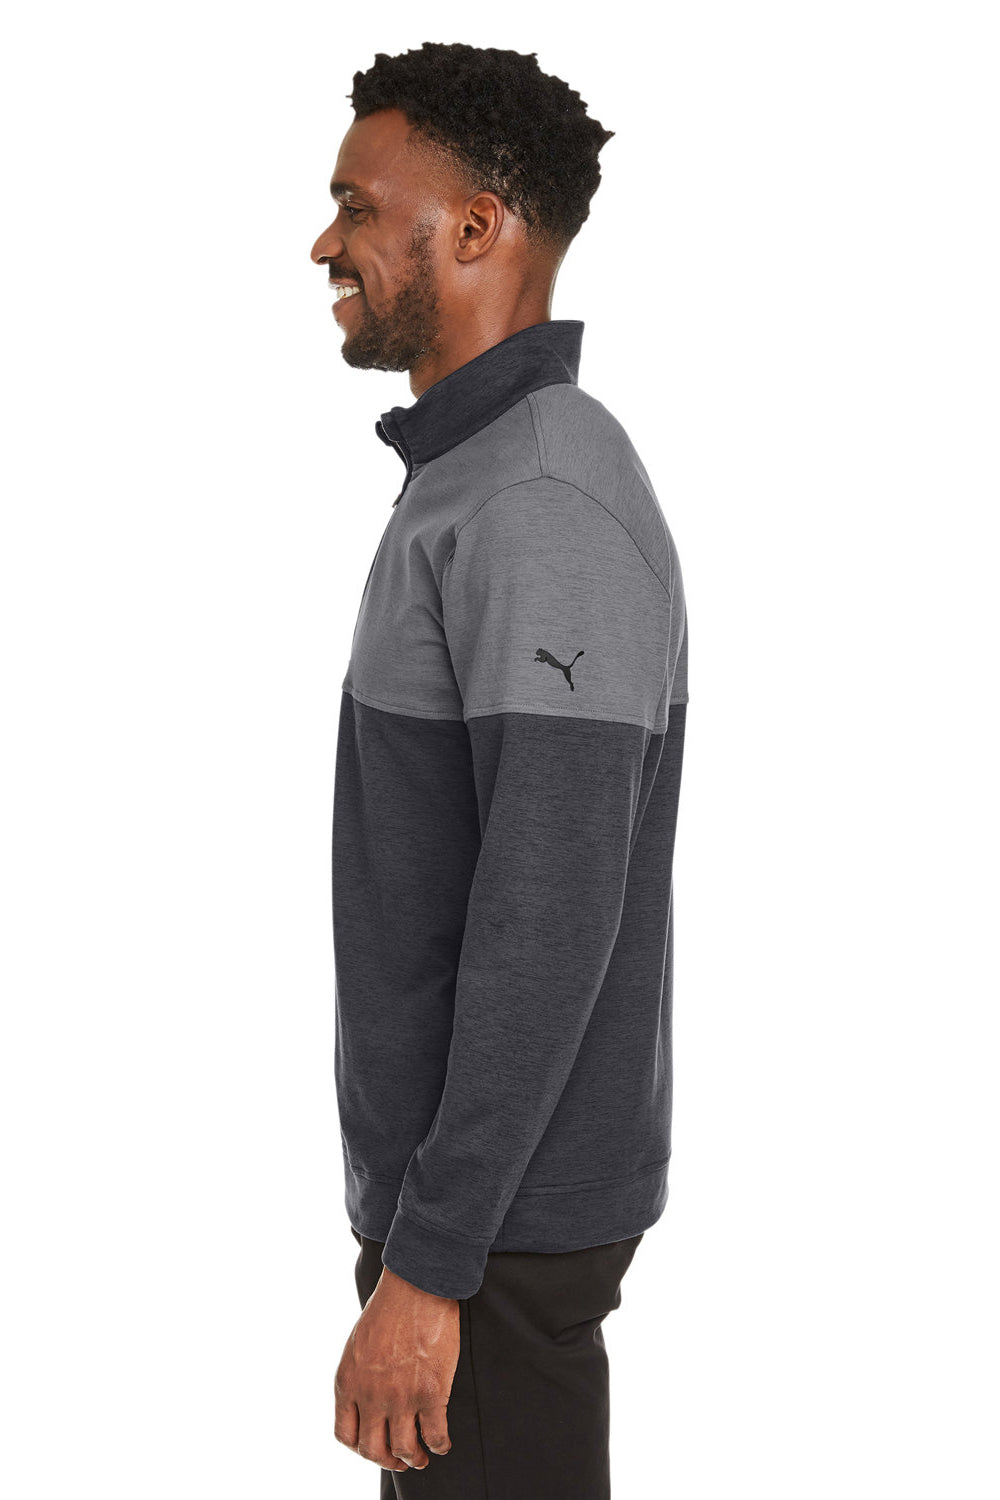 Puma 595803 Mens Cloudspun Warm Up 1/4 Zip Sweatshirt Black/Quiet Shade Grey Side